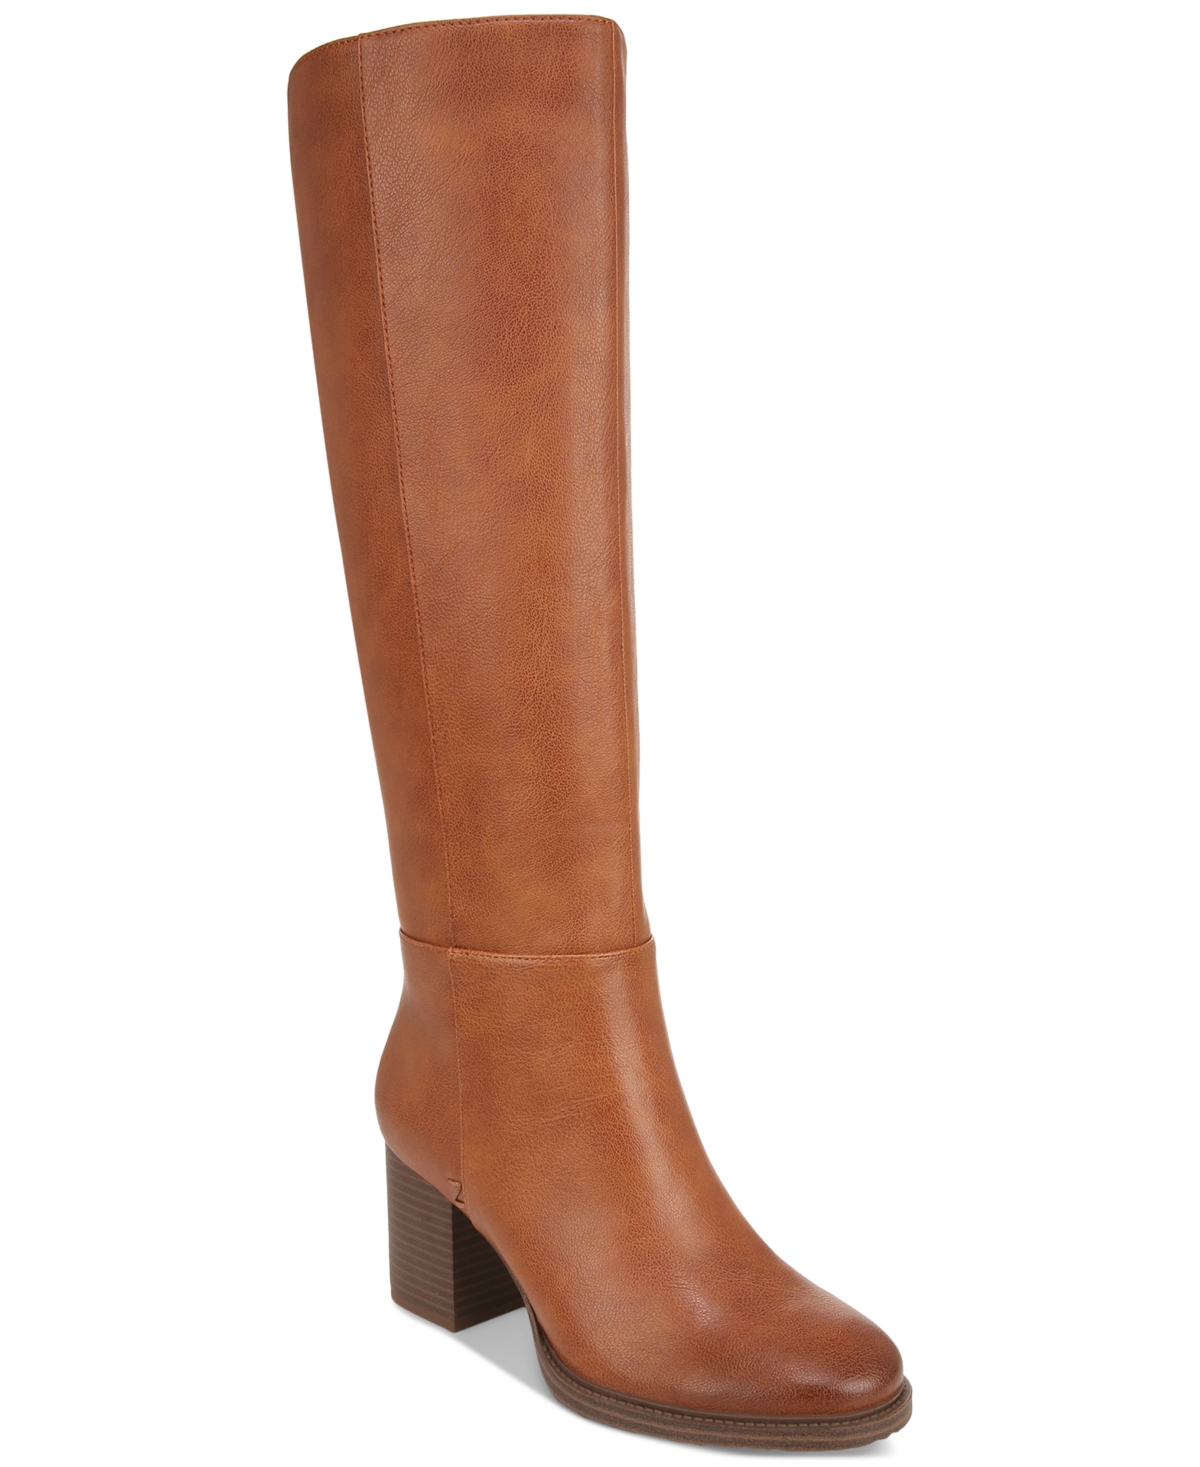 Women's Riona Wide-Calf Block-Heel Riding Boots - Cognac Leather